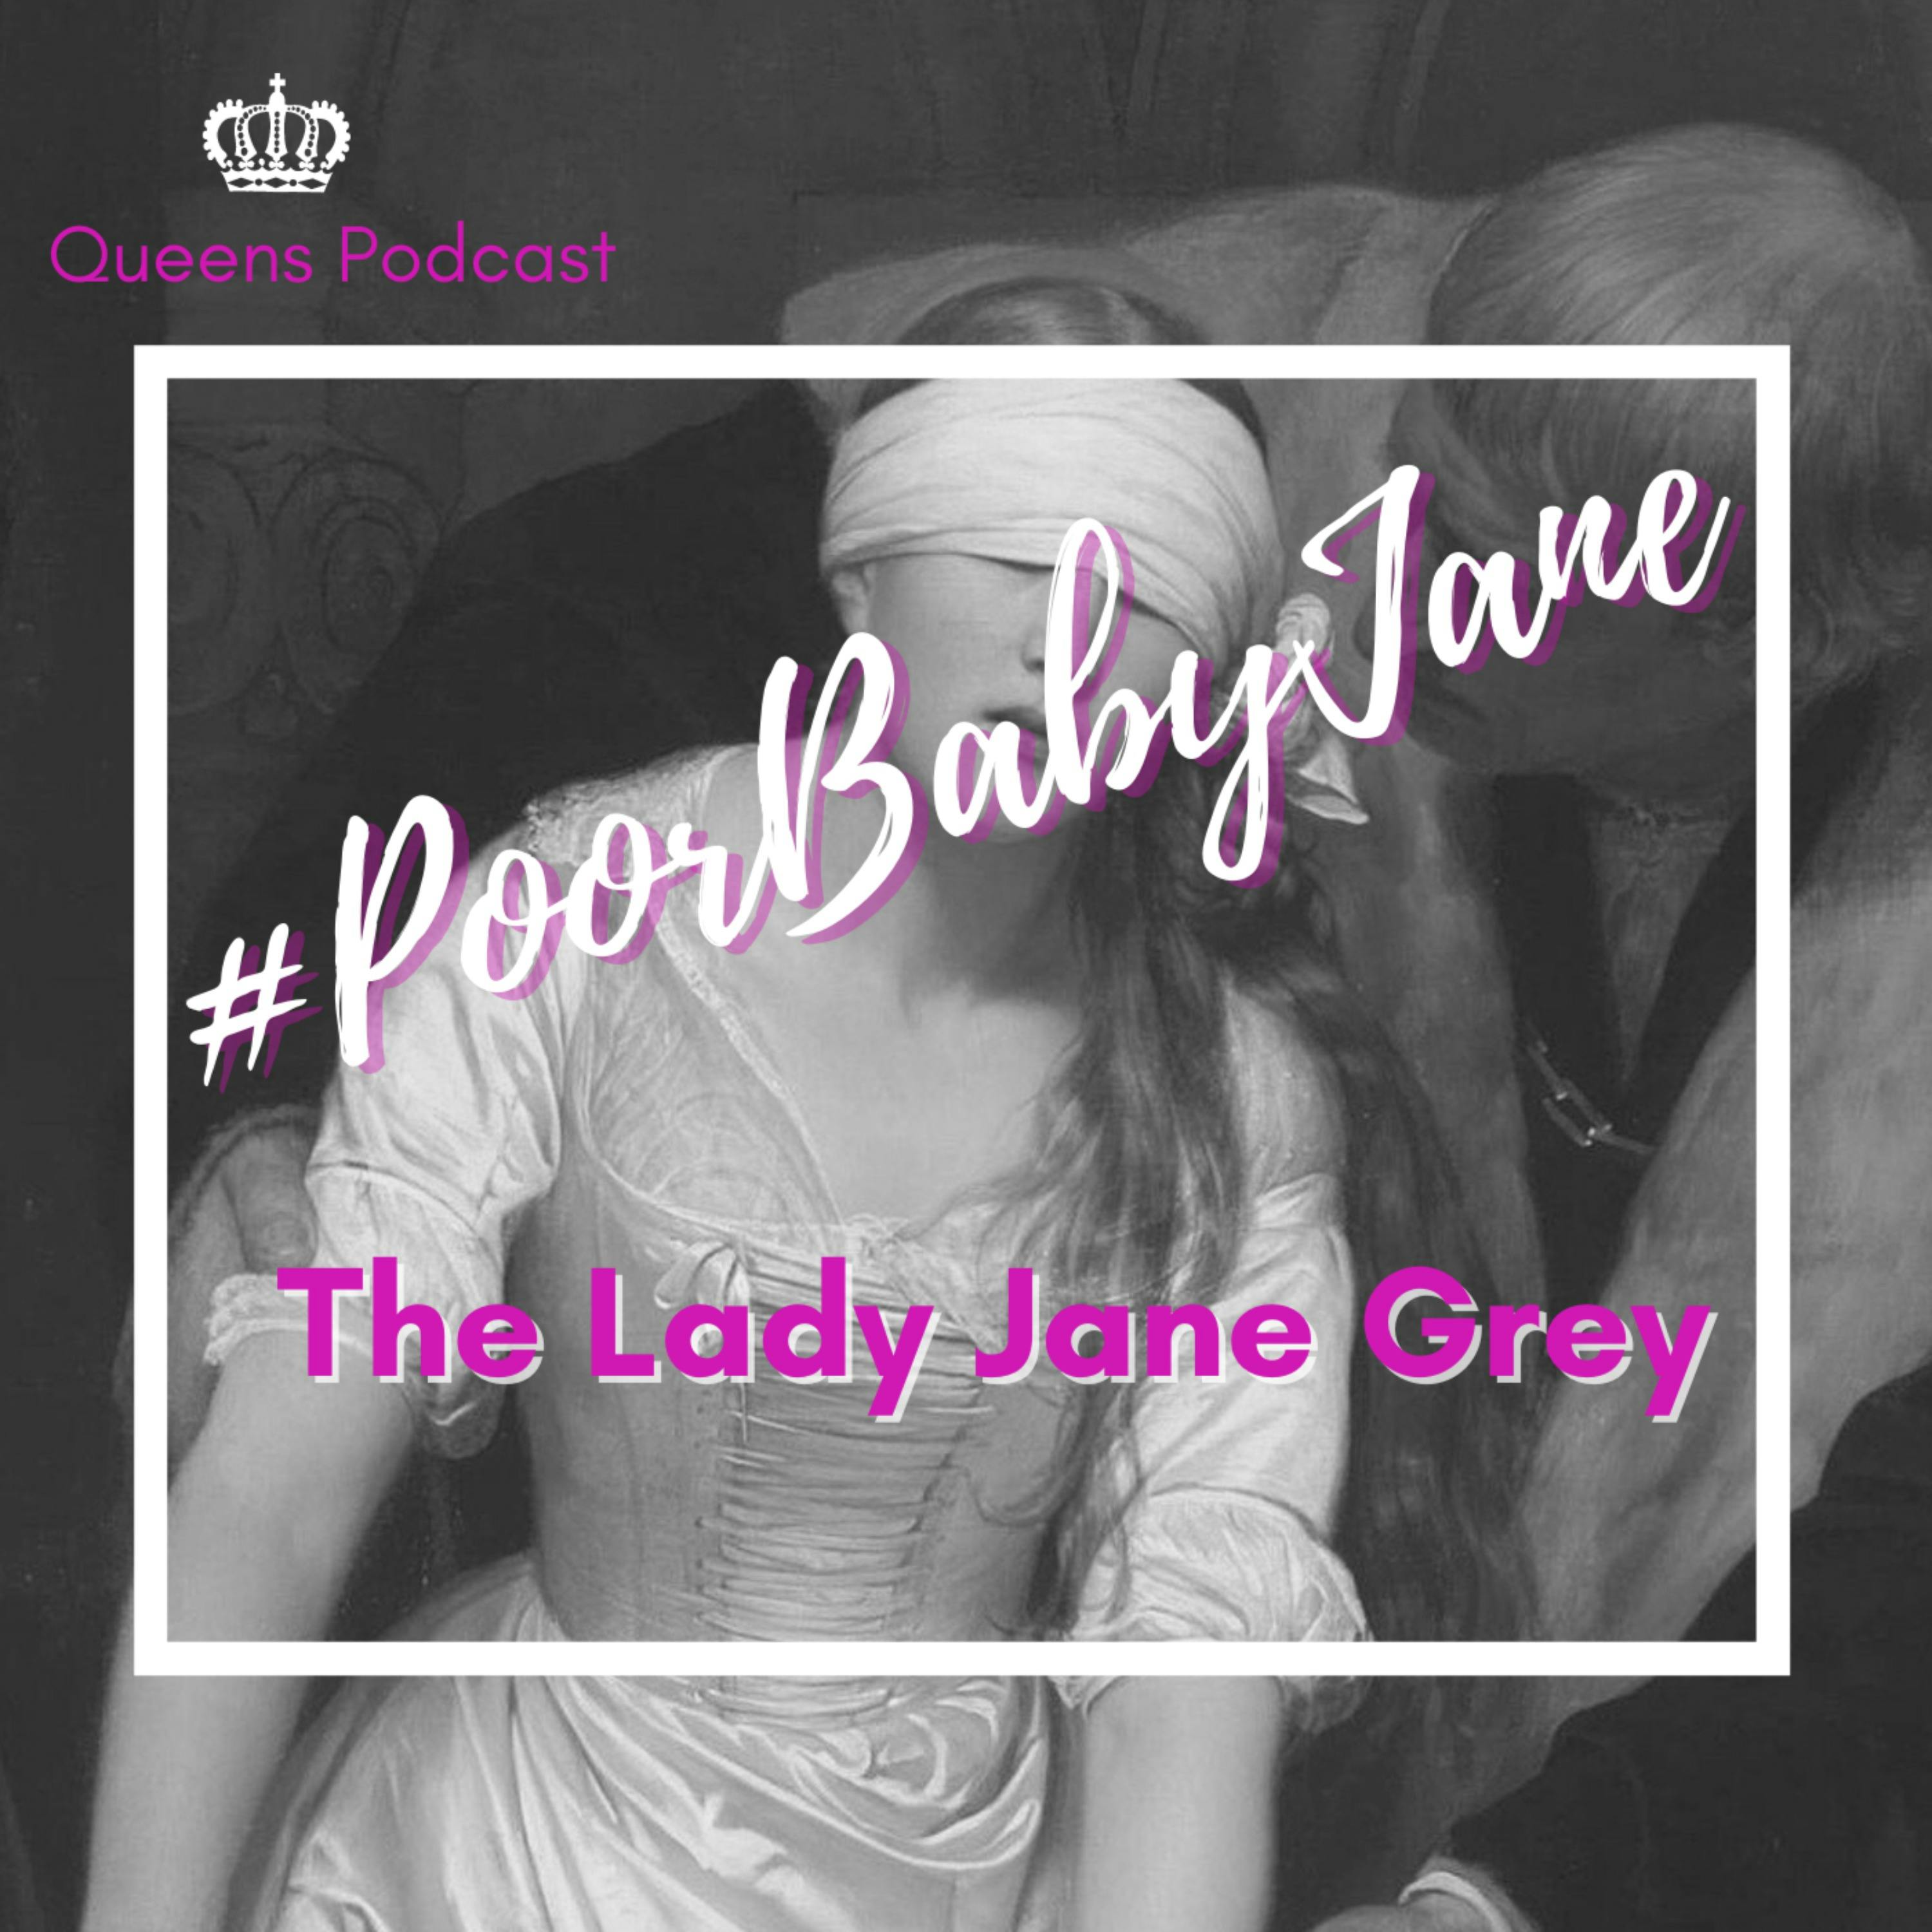 The Lady Jane Grey